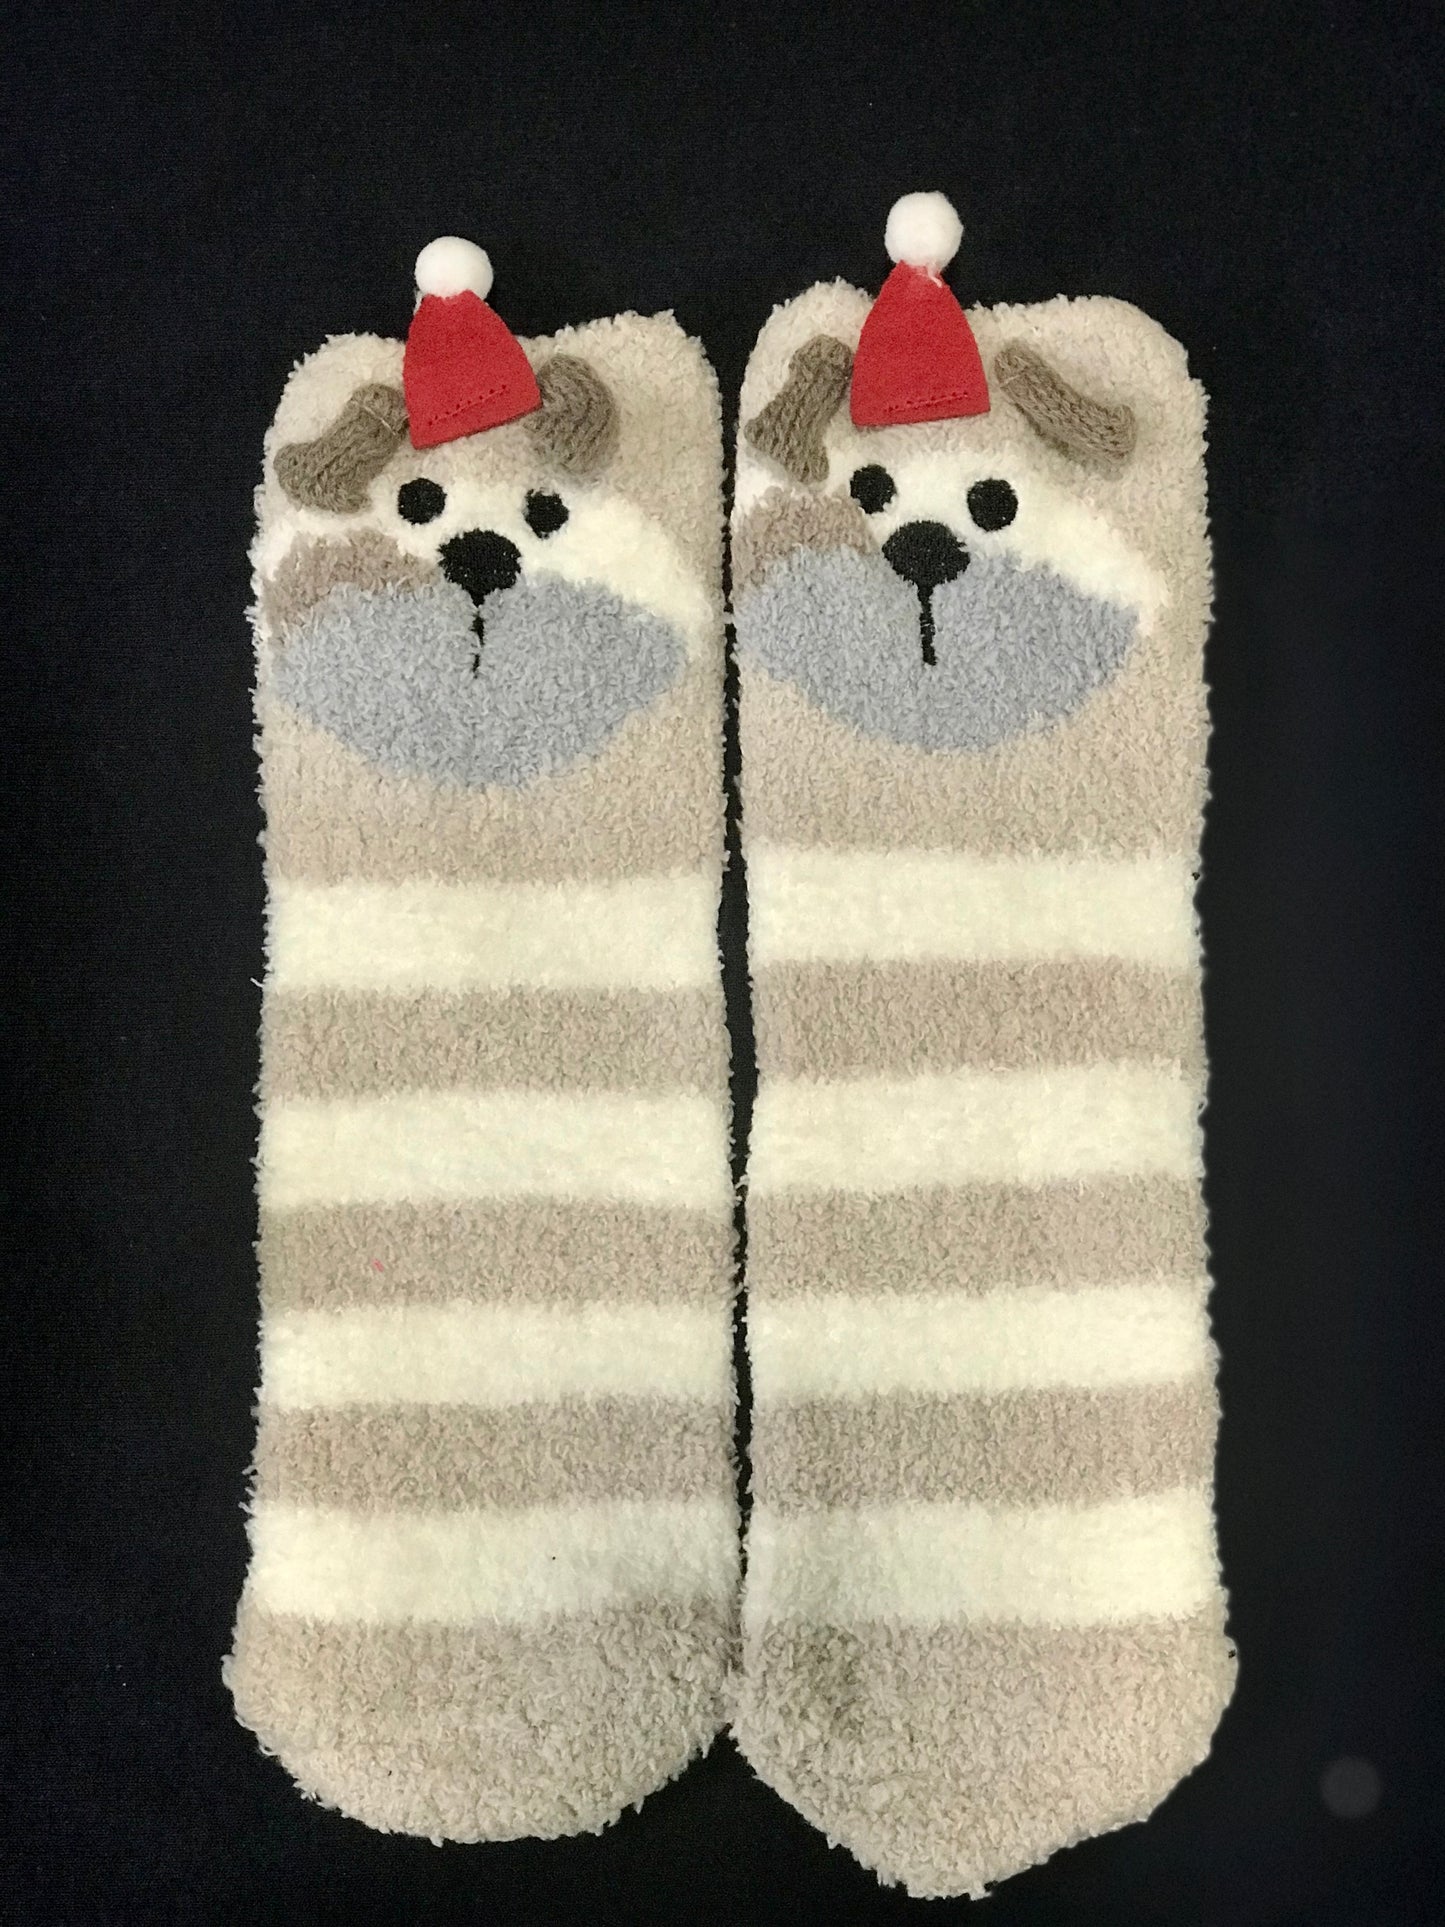 Christmas Bear Socks in a Box